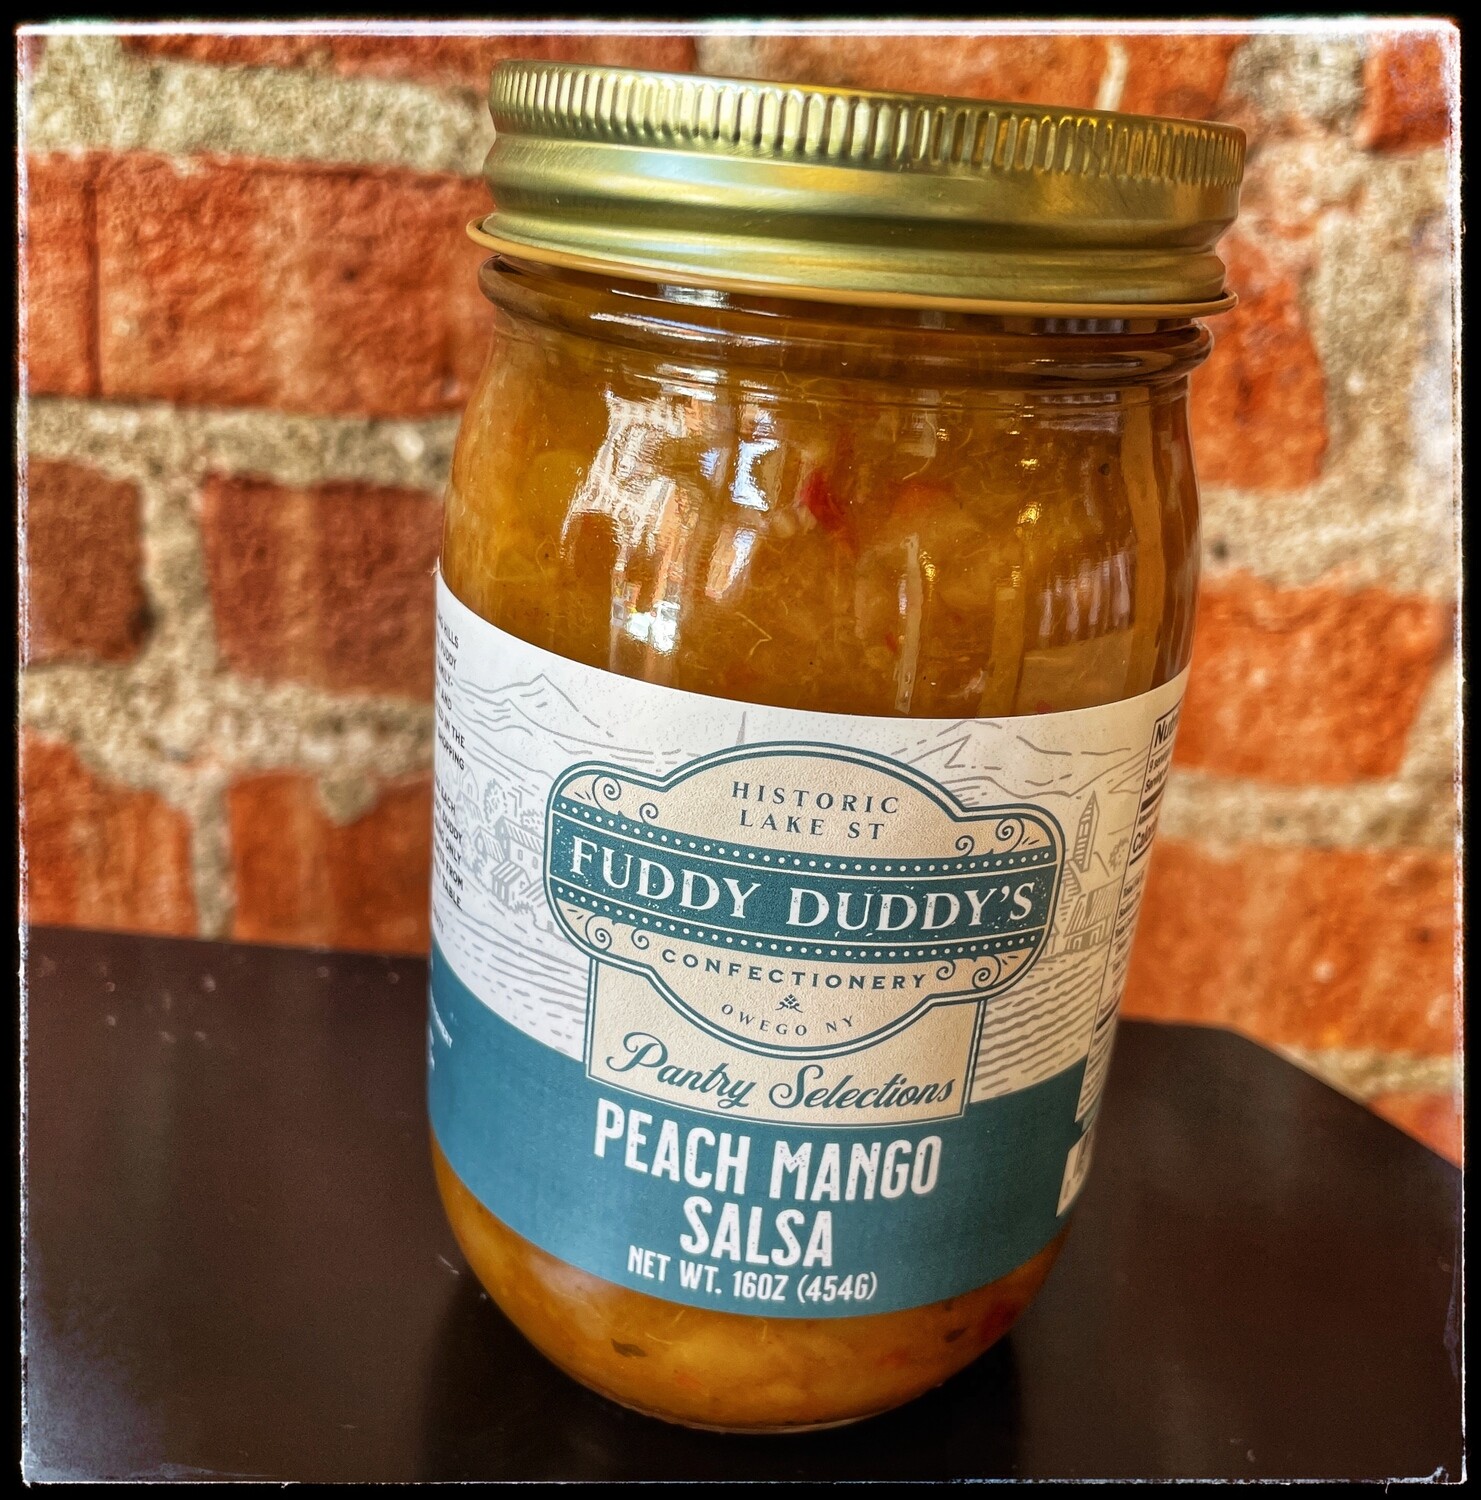 Fuddy Duddy's Peach Mango Salsa